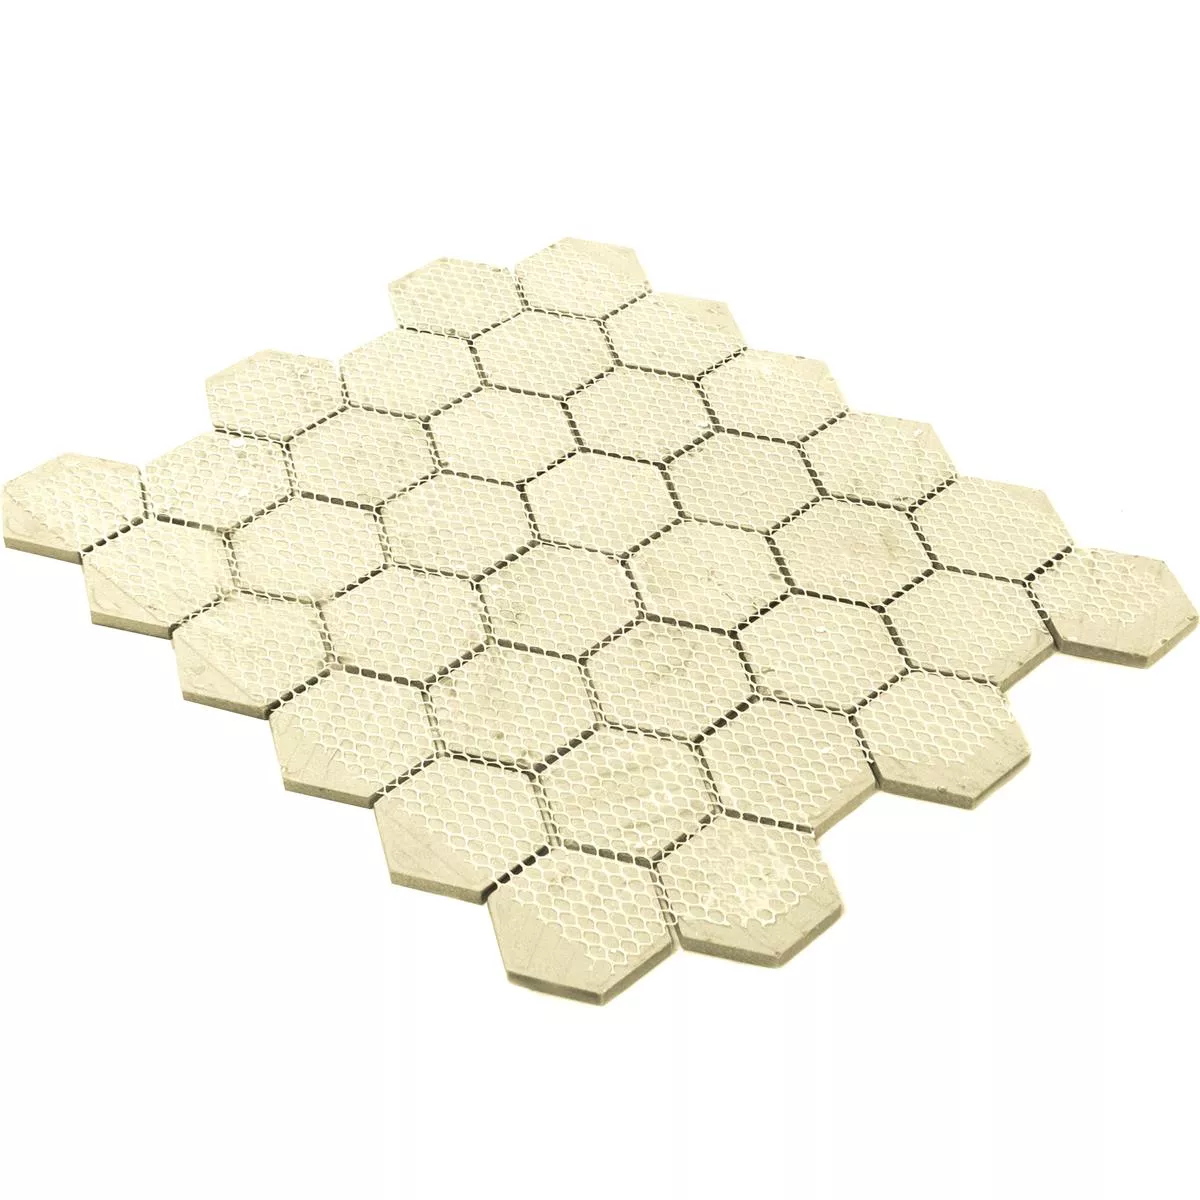 Ceramic Mosaic Tiles Eldertown Hexagon Grey